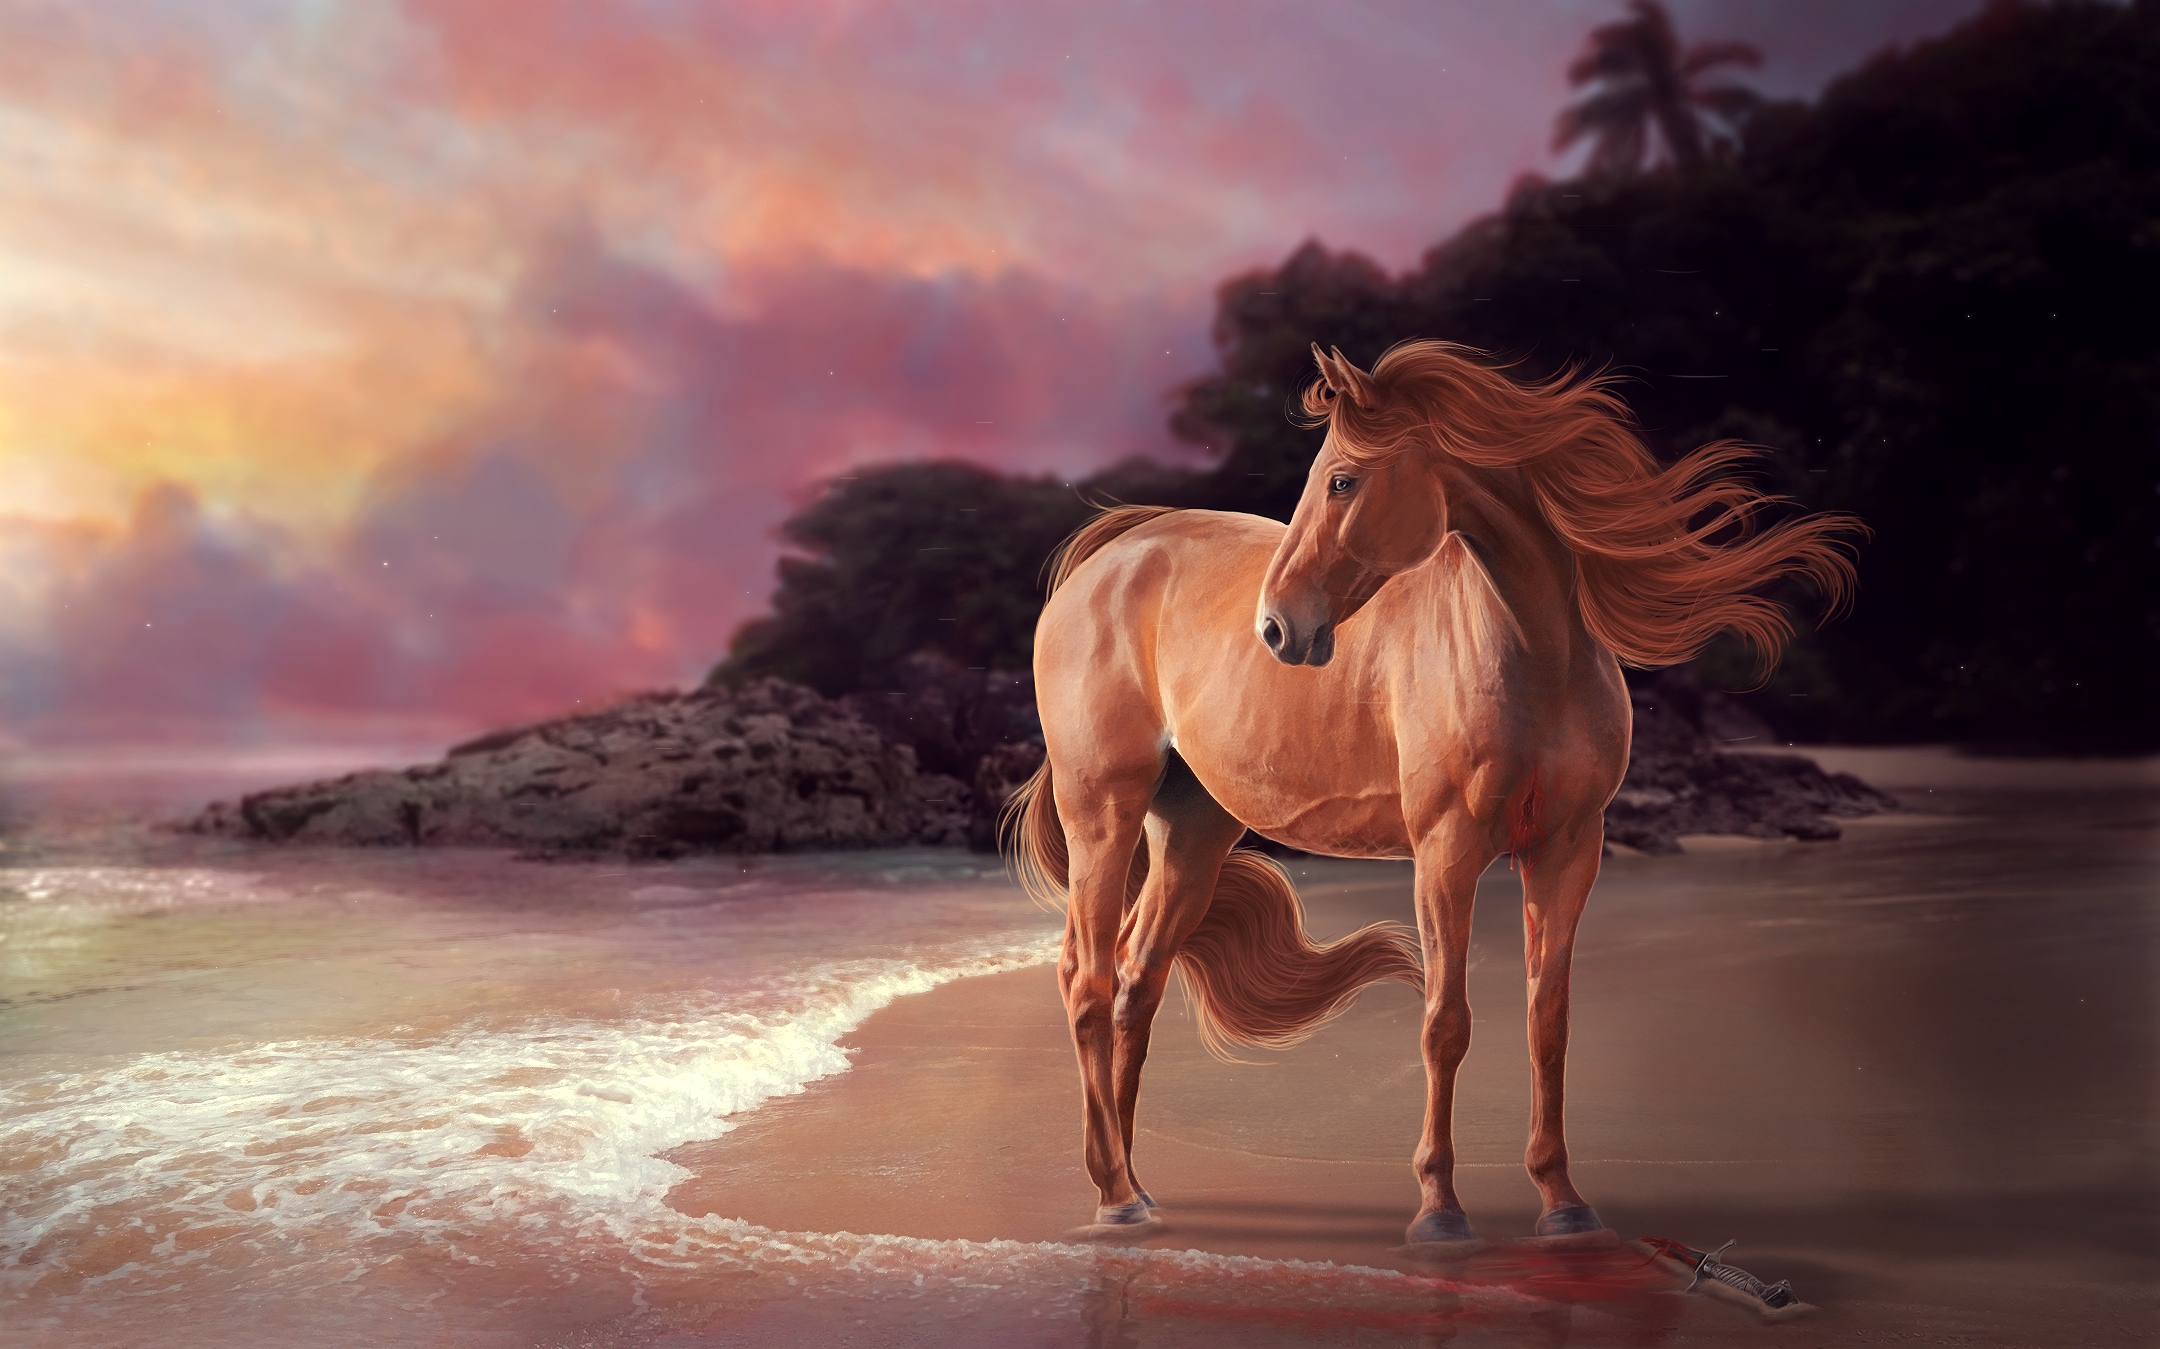 Horse On Sunset Beach By Jenna Phillips